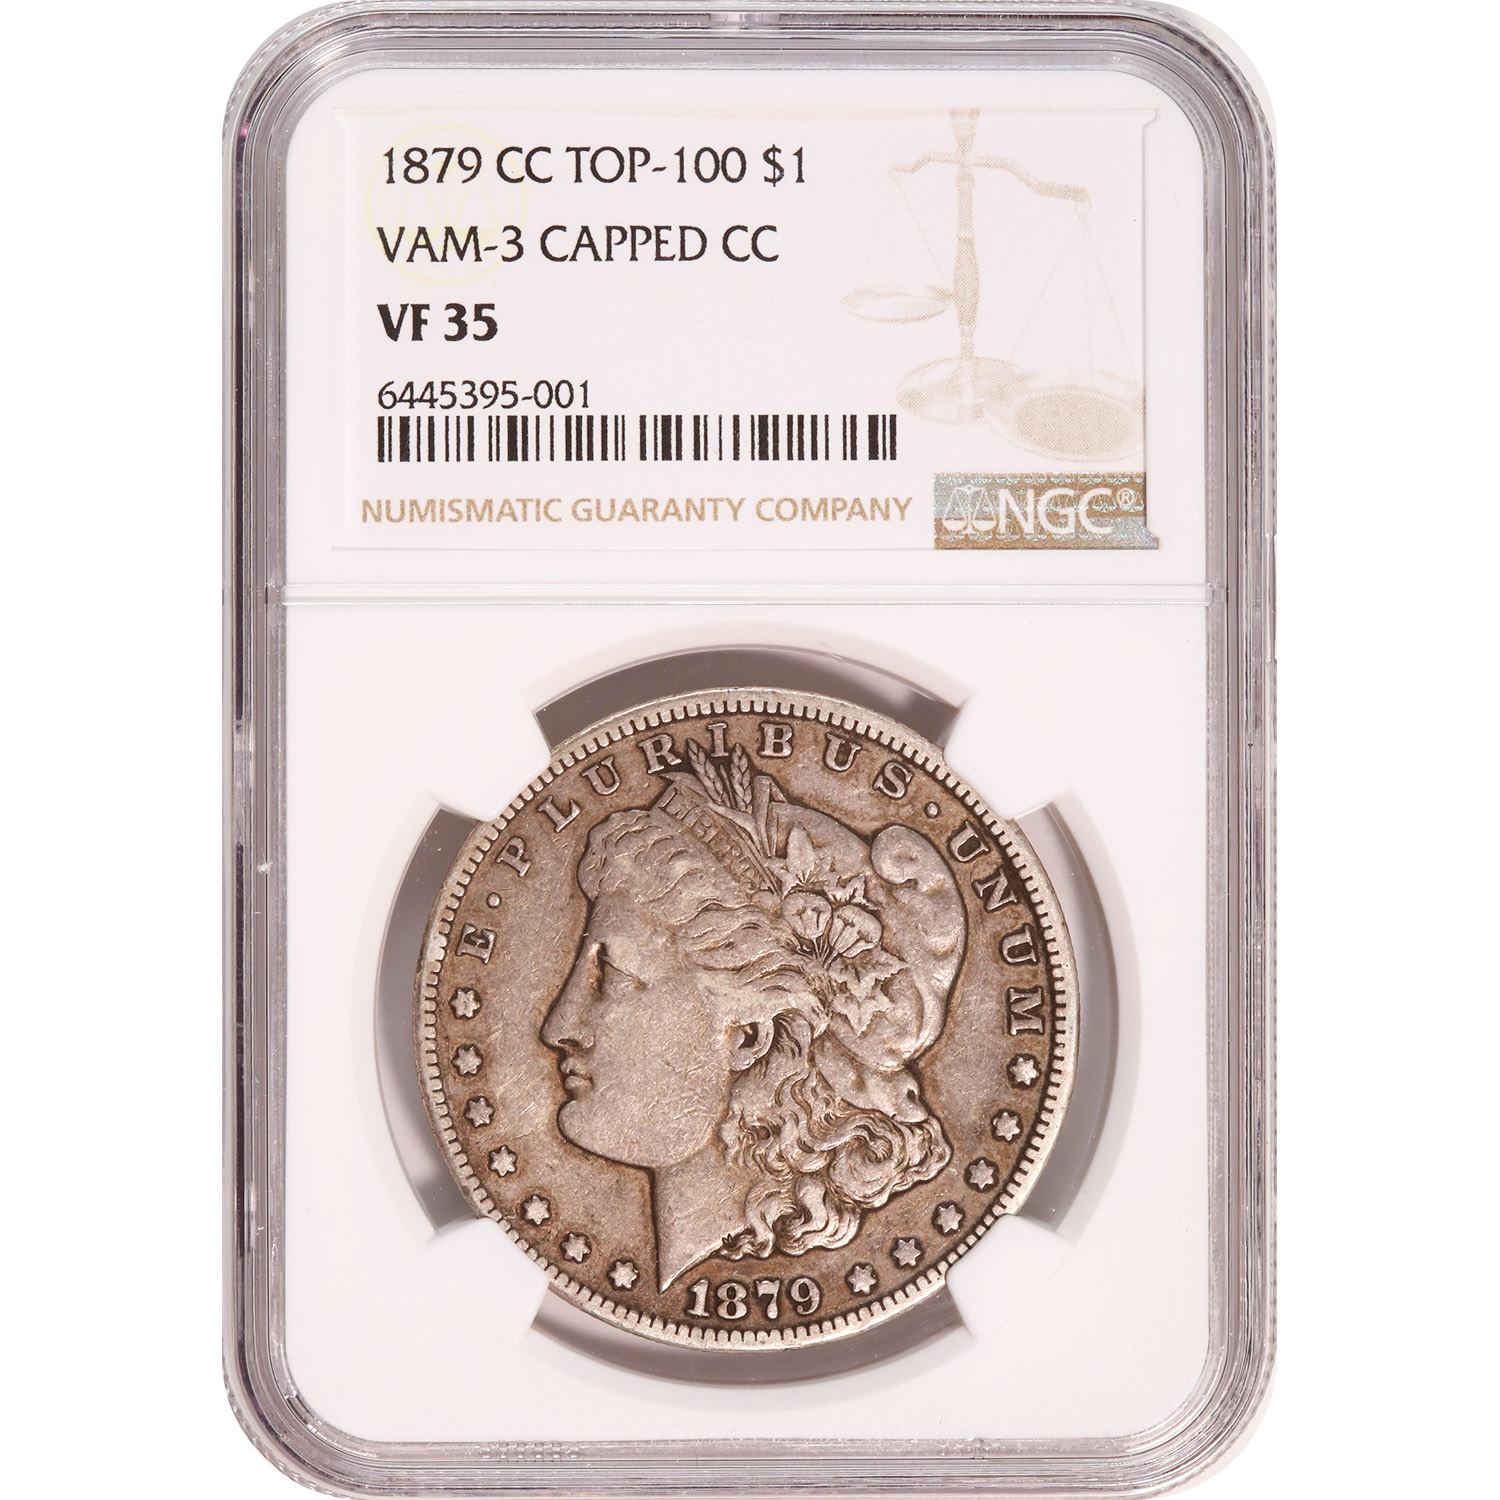 Certified Morgan Silver Dollar 1879-CC Capped CC VAM-3 VF35 NGC